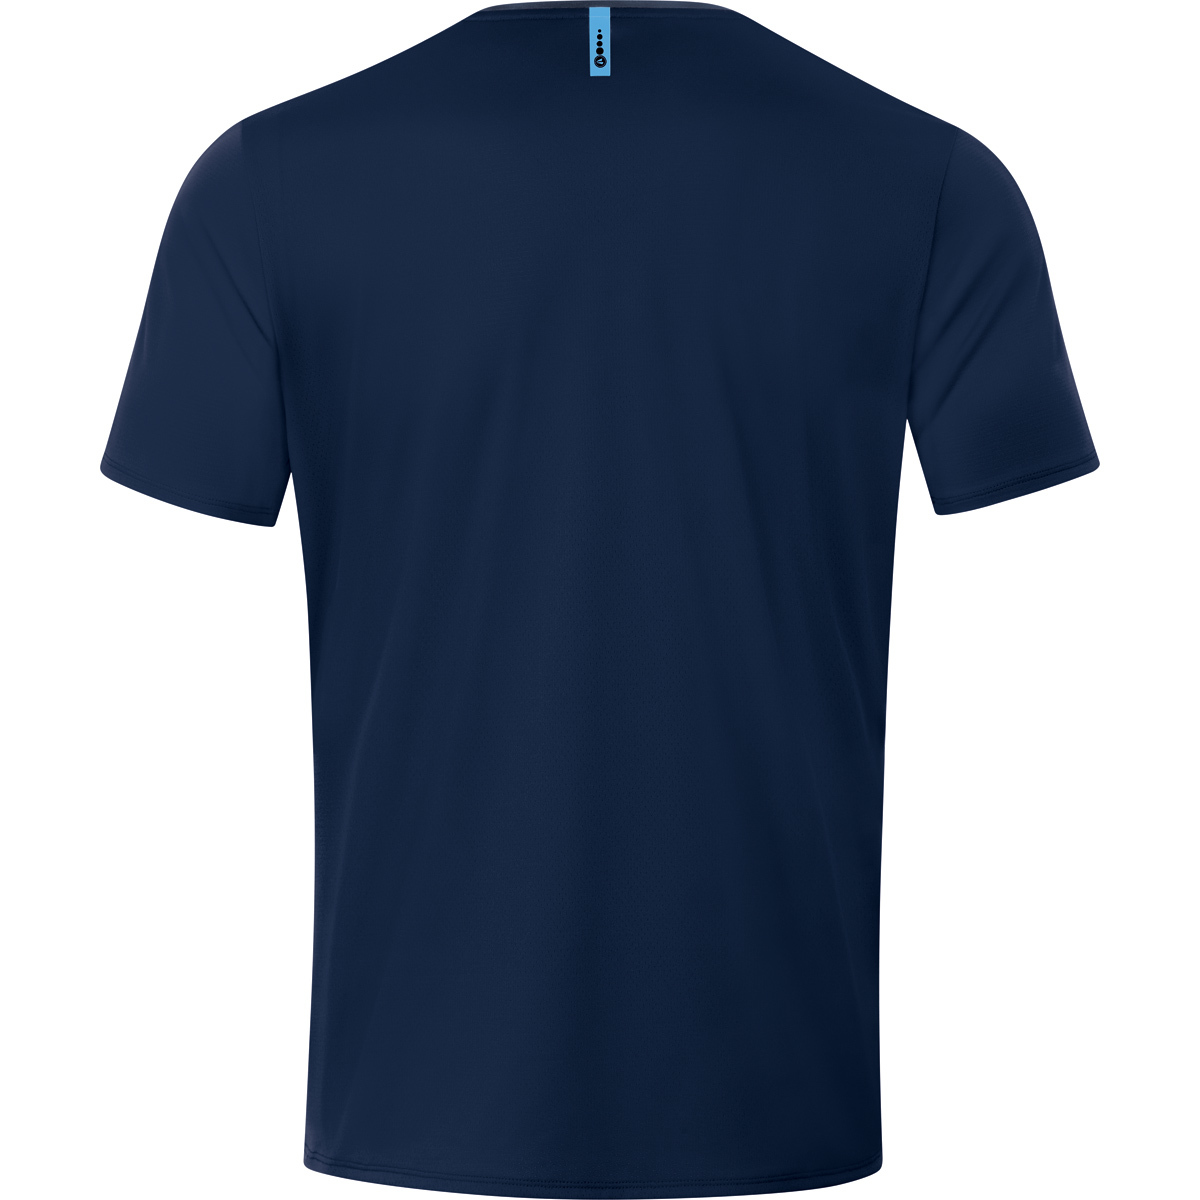 Champ T-Shirt 2.0 Gr. Herren, 6120 marine/darkblue/skyblue, L, JAKO